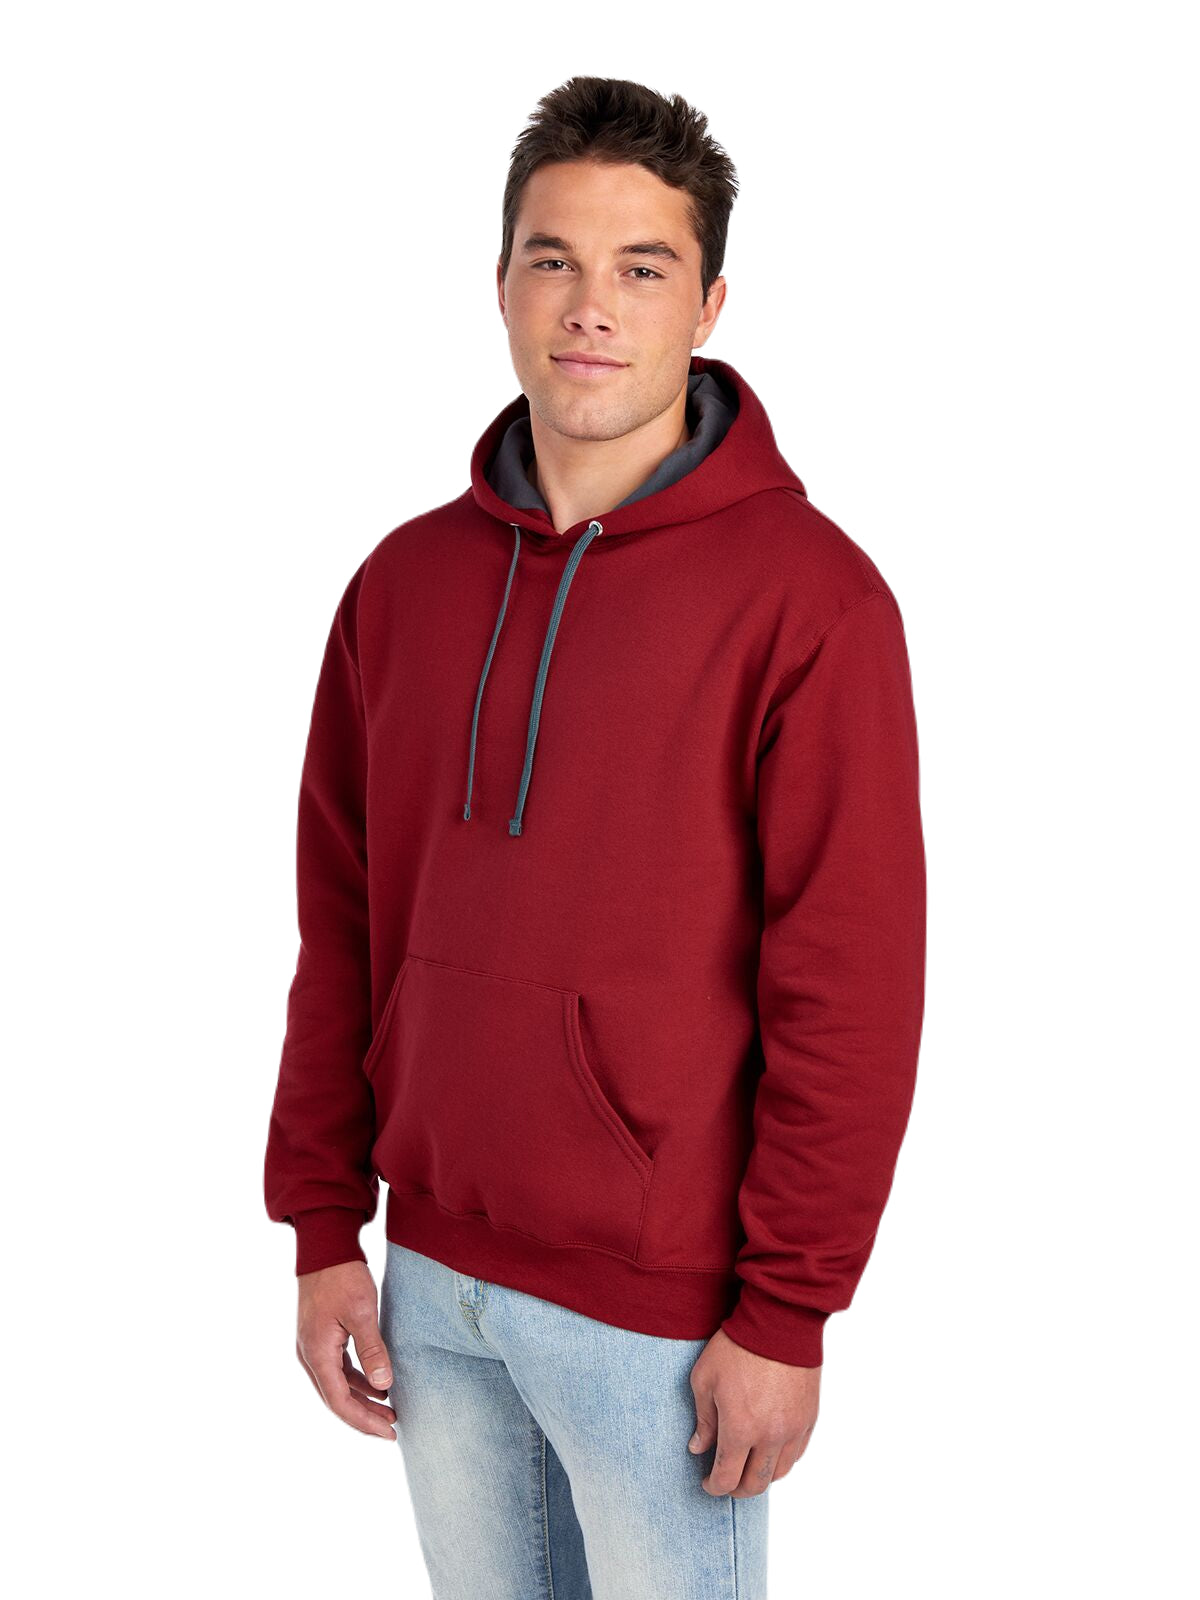 Adult Unisex 7.2 oz. SofSpun® Hooded Sweatshirt